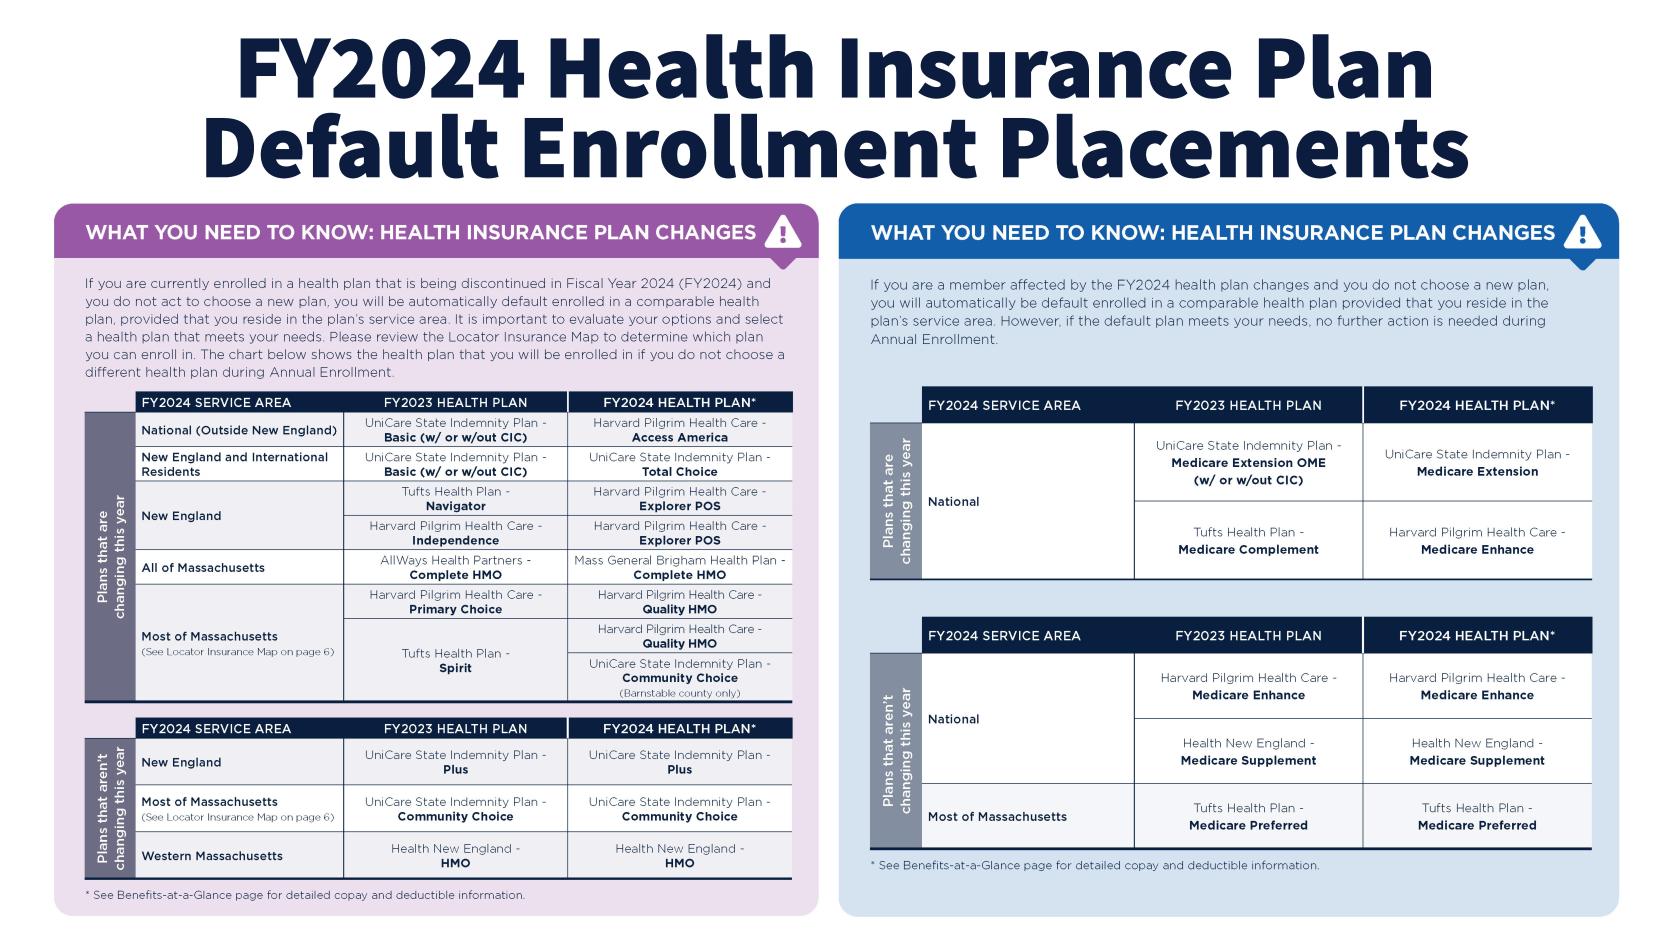 Health Insurance Plan Default Enrollment Placements For Benefits Effective July 1, 2023